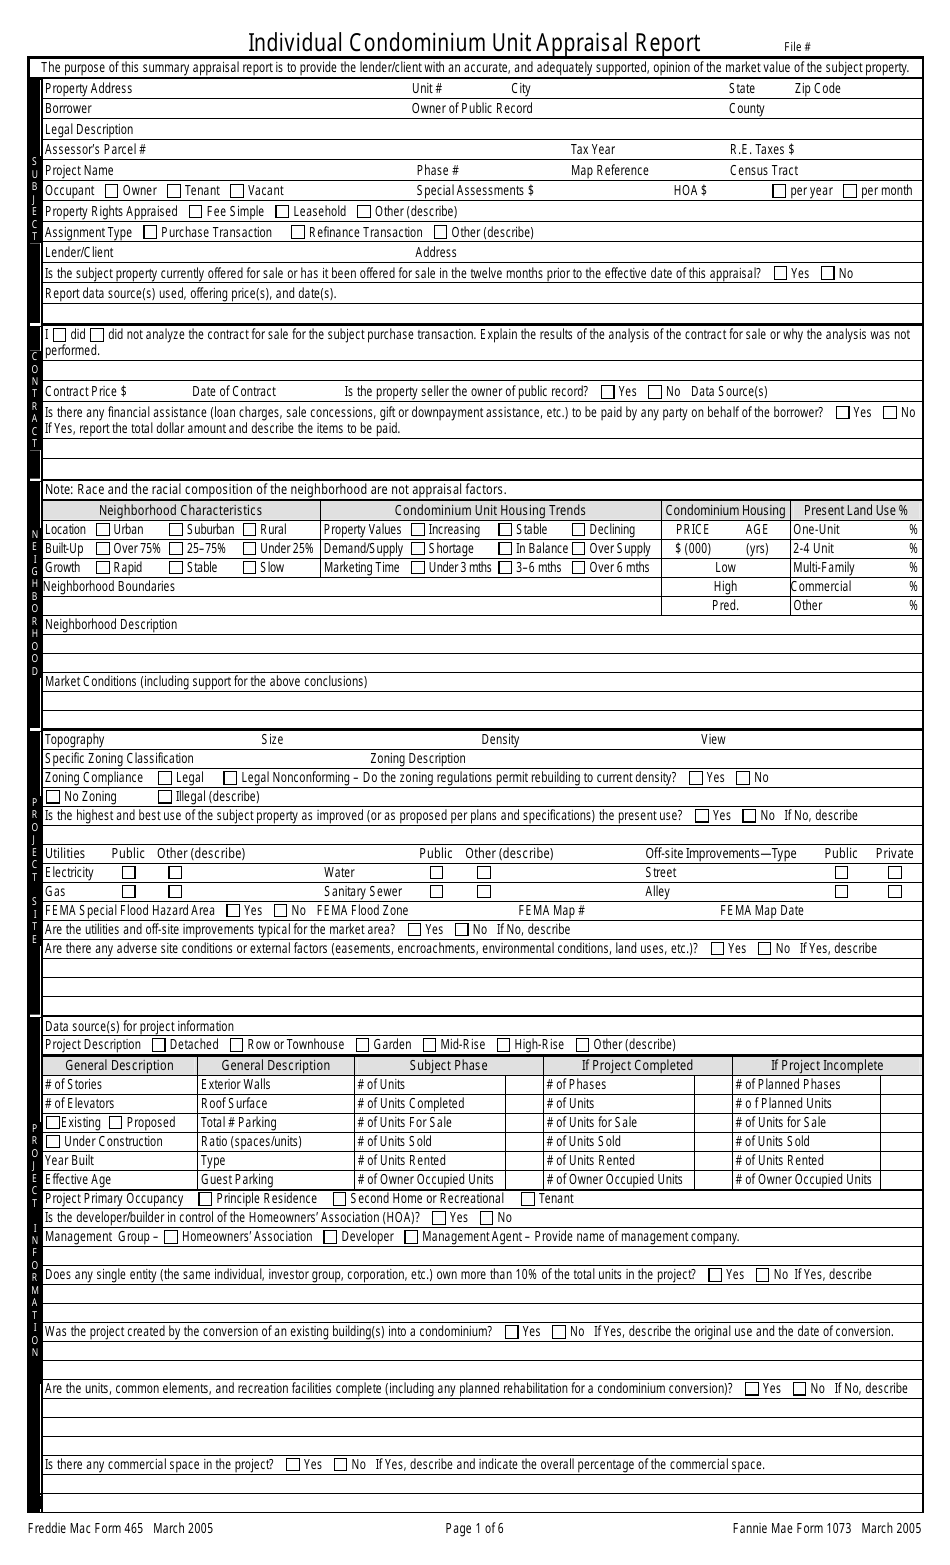 Fannie Mae Form 1073 Individual Condominium Unit Appraisal Report, Page 1